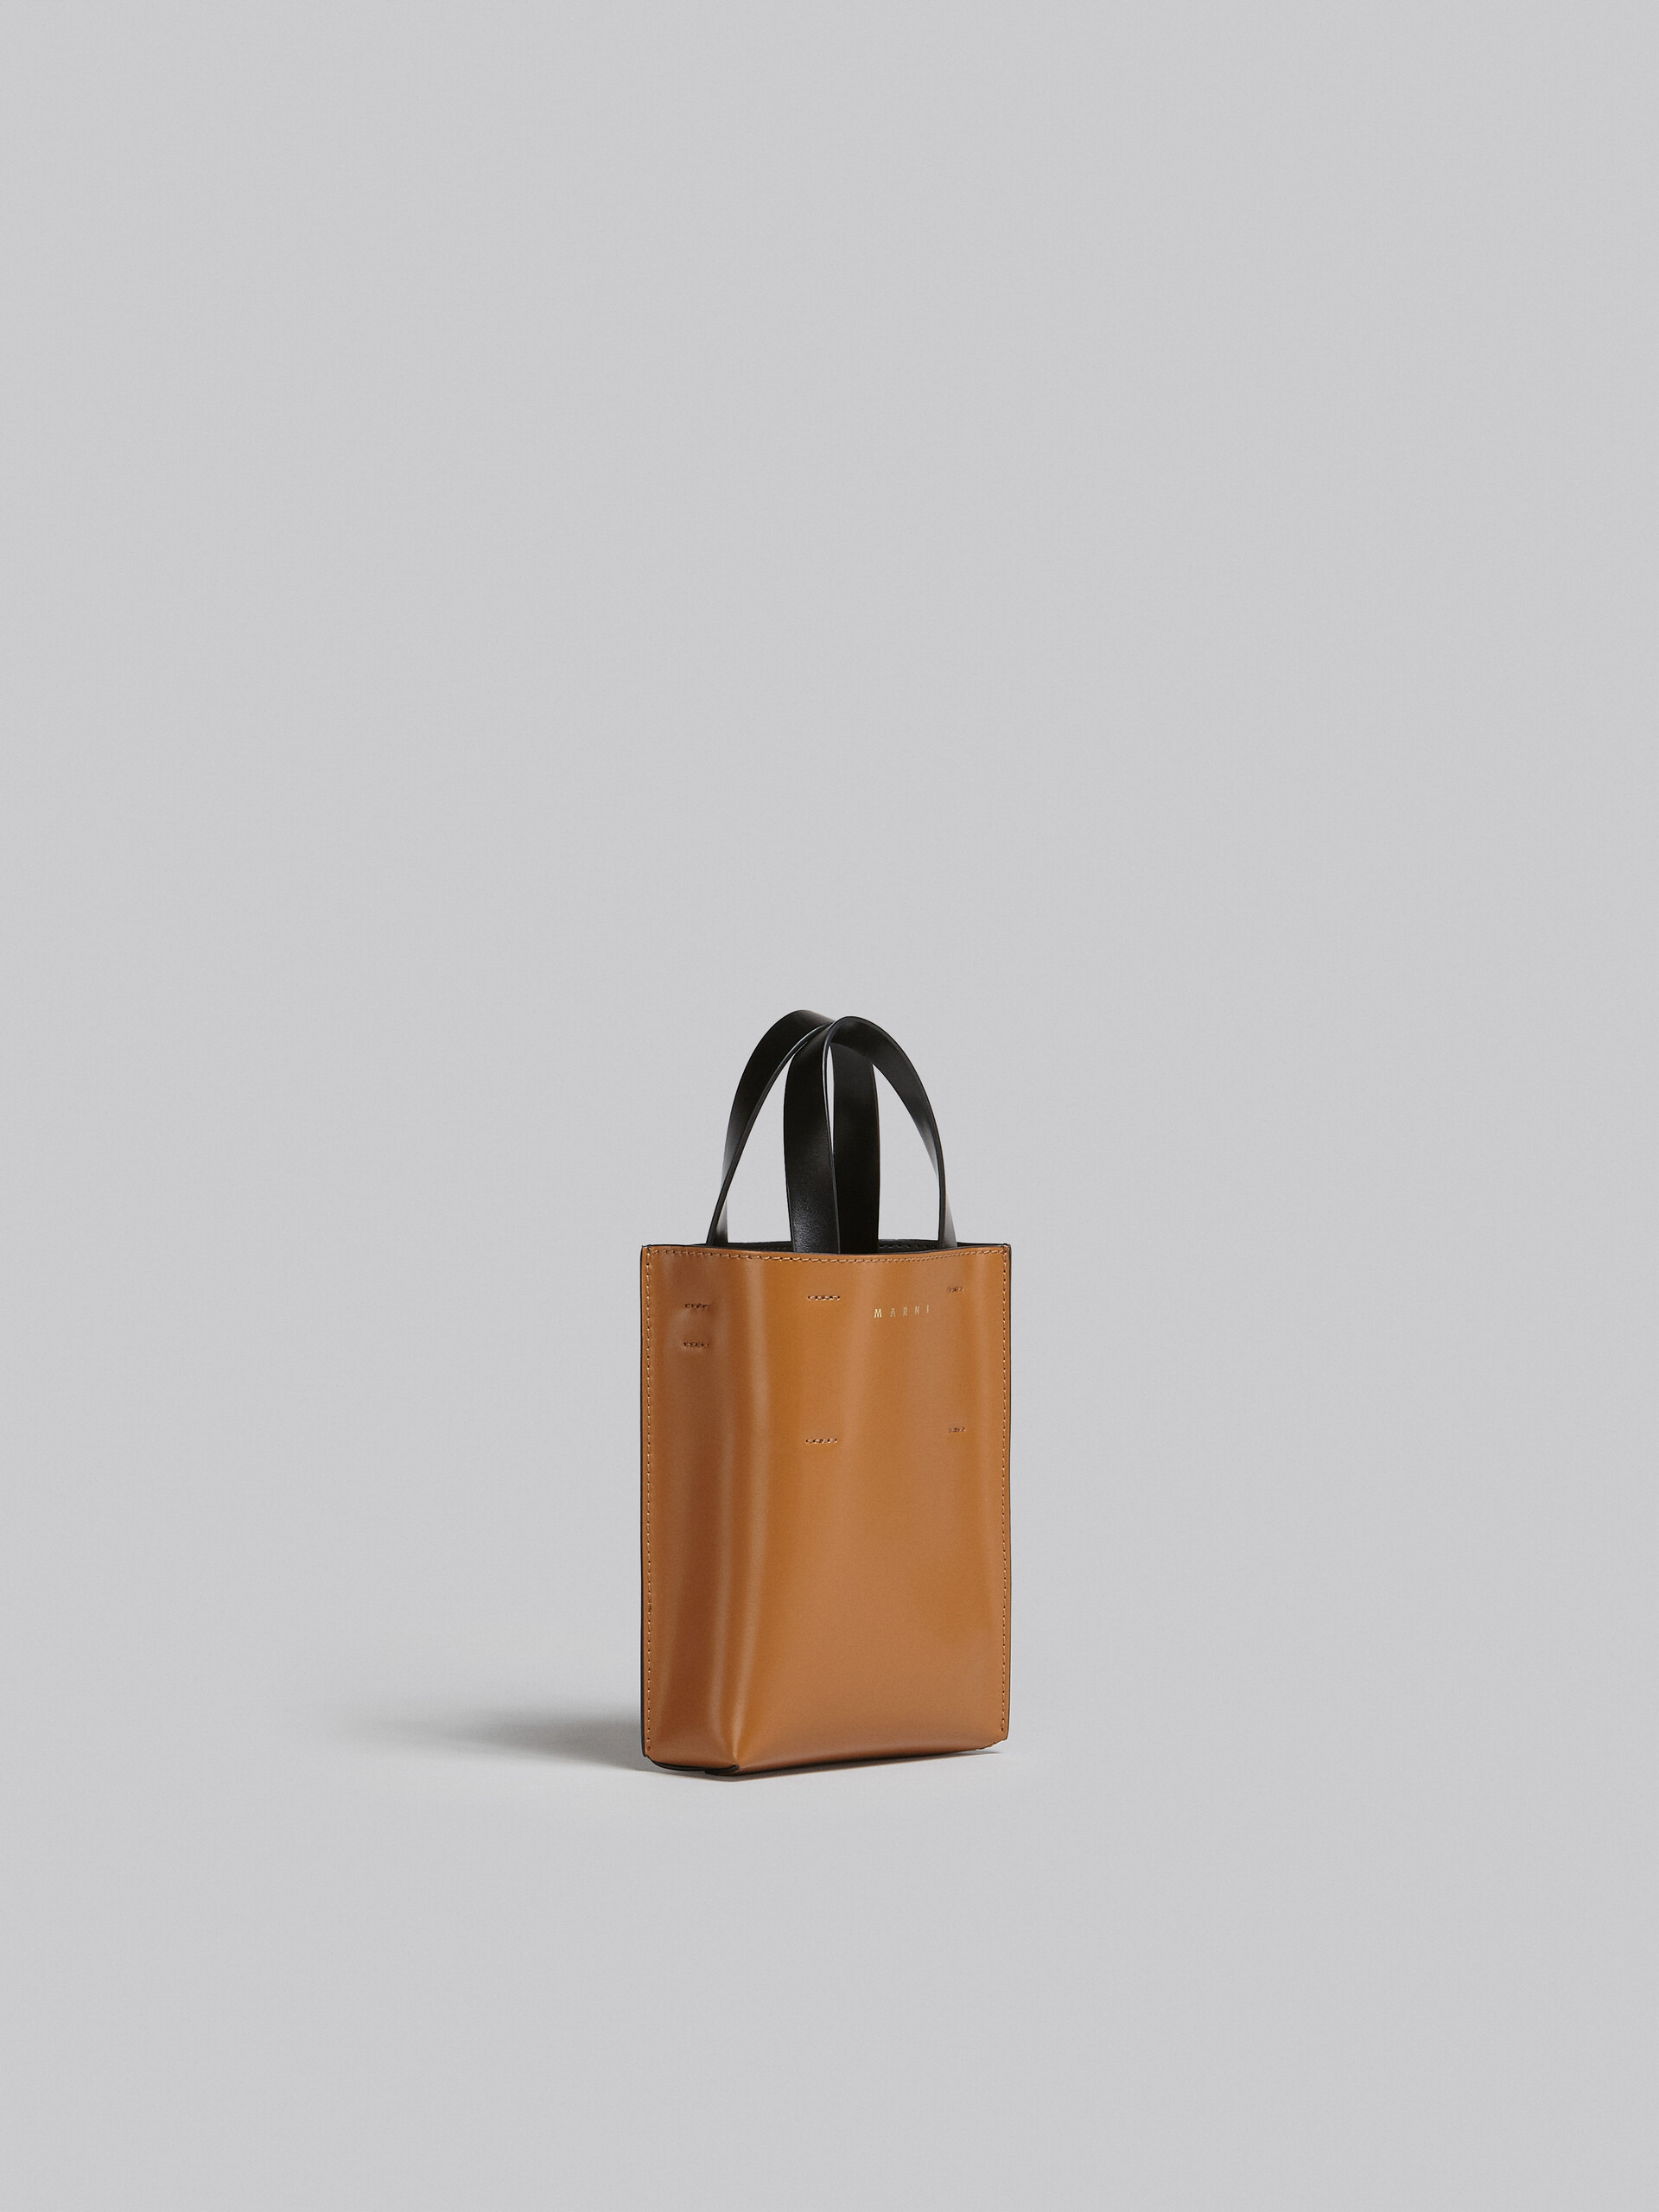 MUSEO bag nano in pelle lucida nera - Borse shopping - Image 6